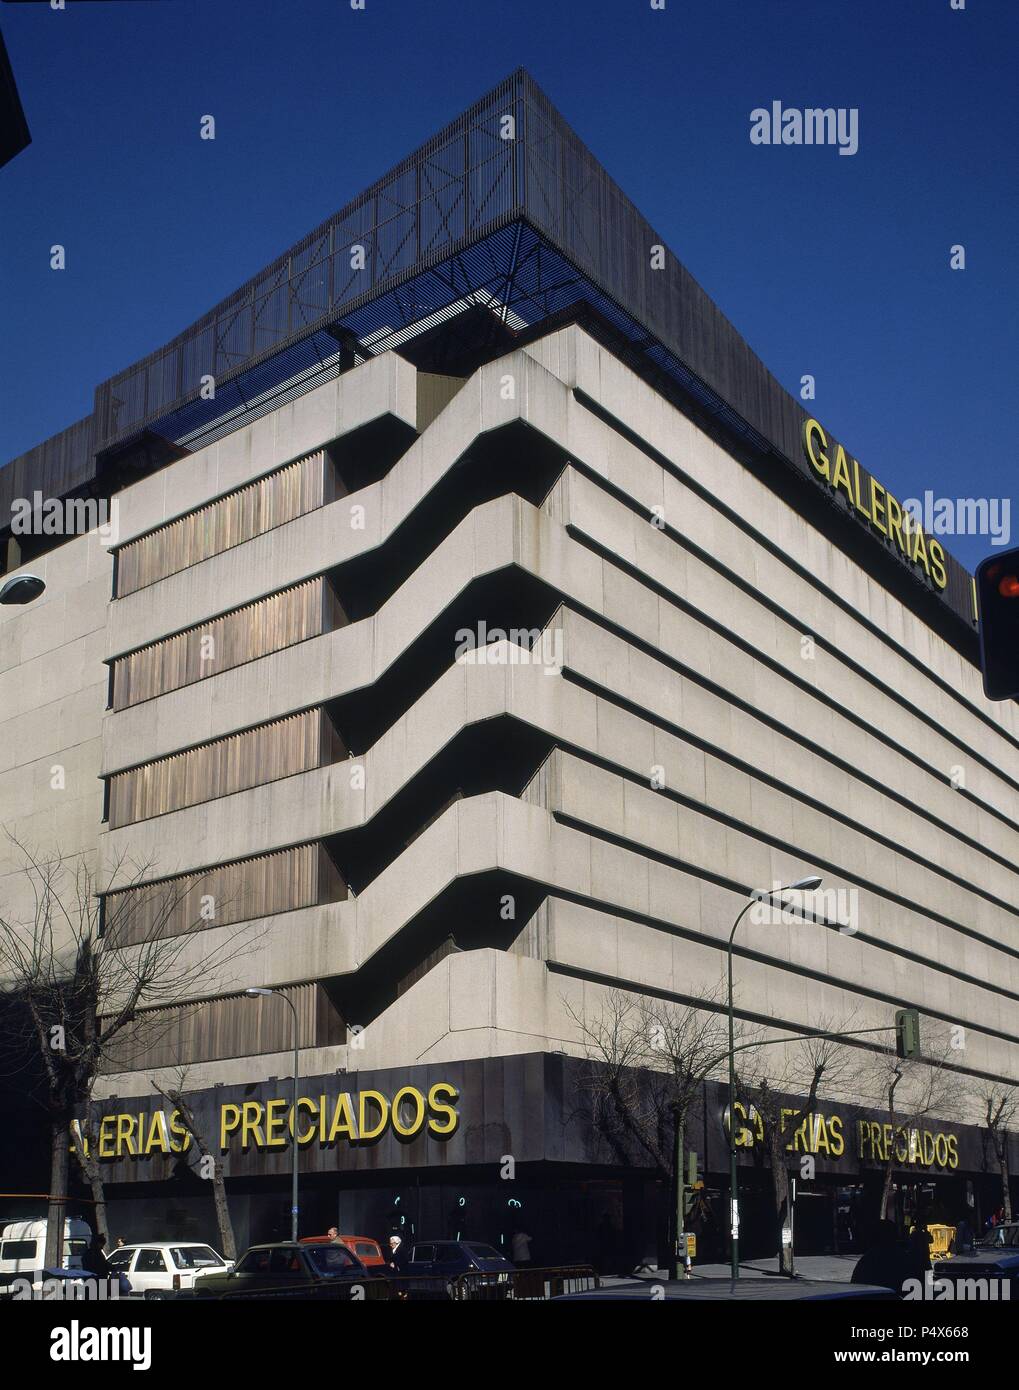 Calle de preciados madrid spain hi-res stock photography and images - Alamy